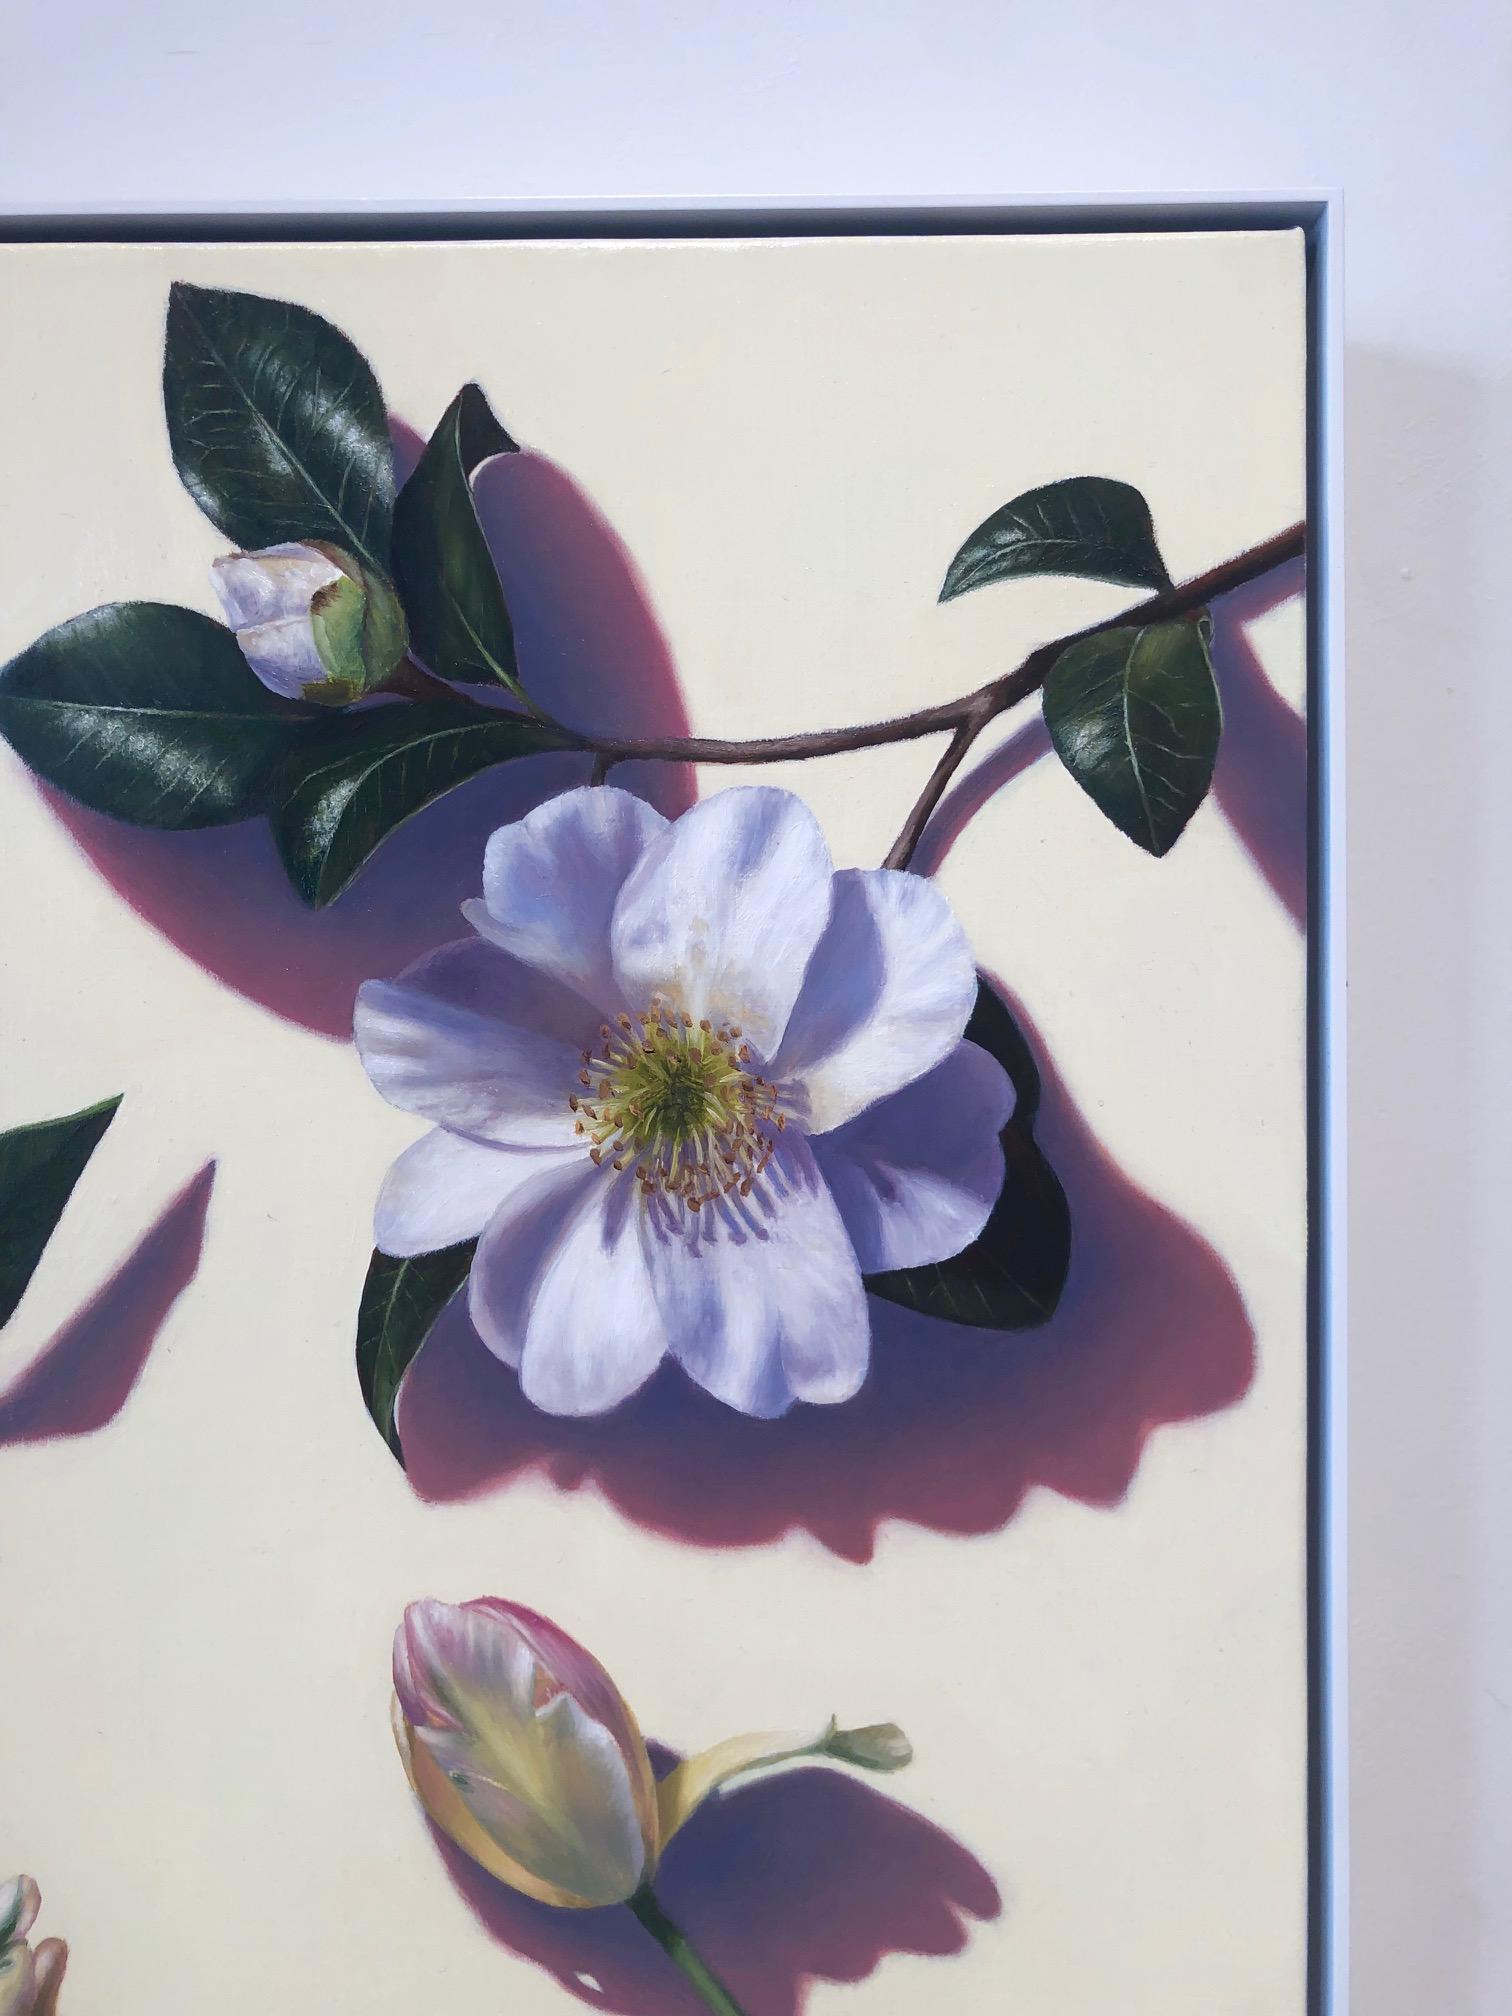 Beauty Above Me, Beauty Below Me / garden portrait lemon & magnolia 1